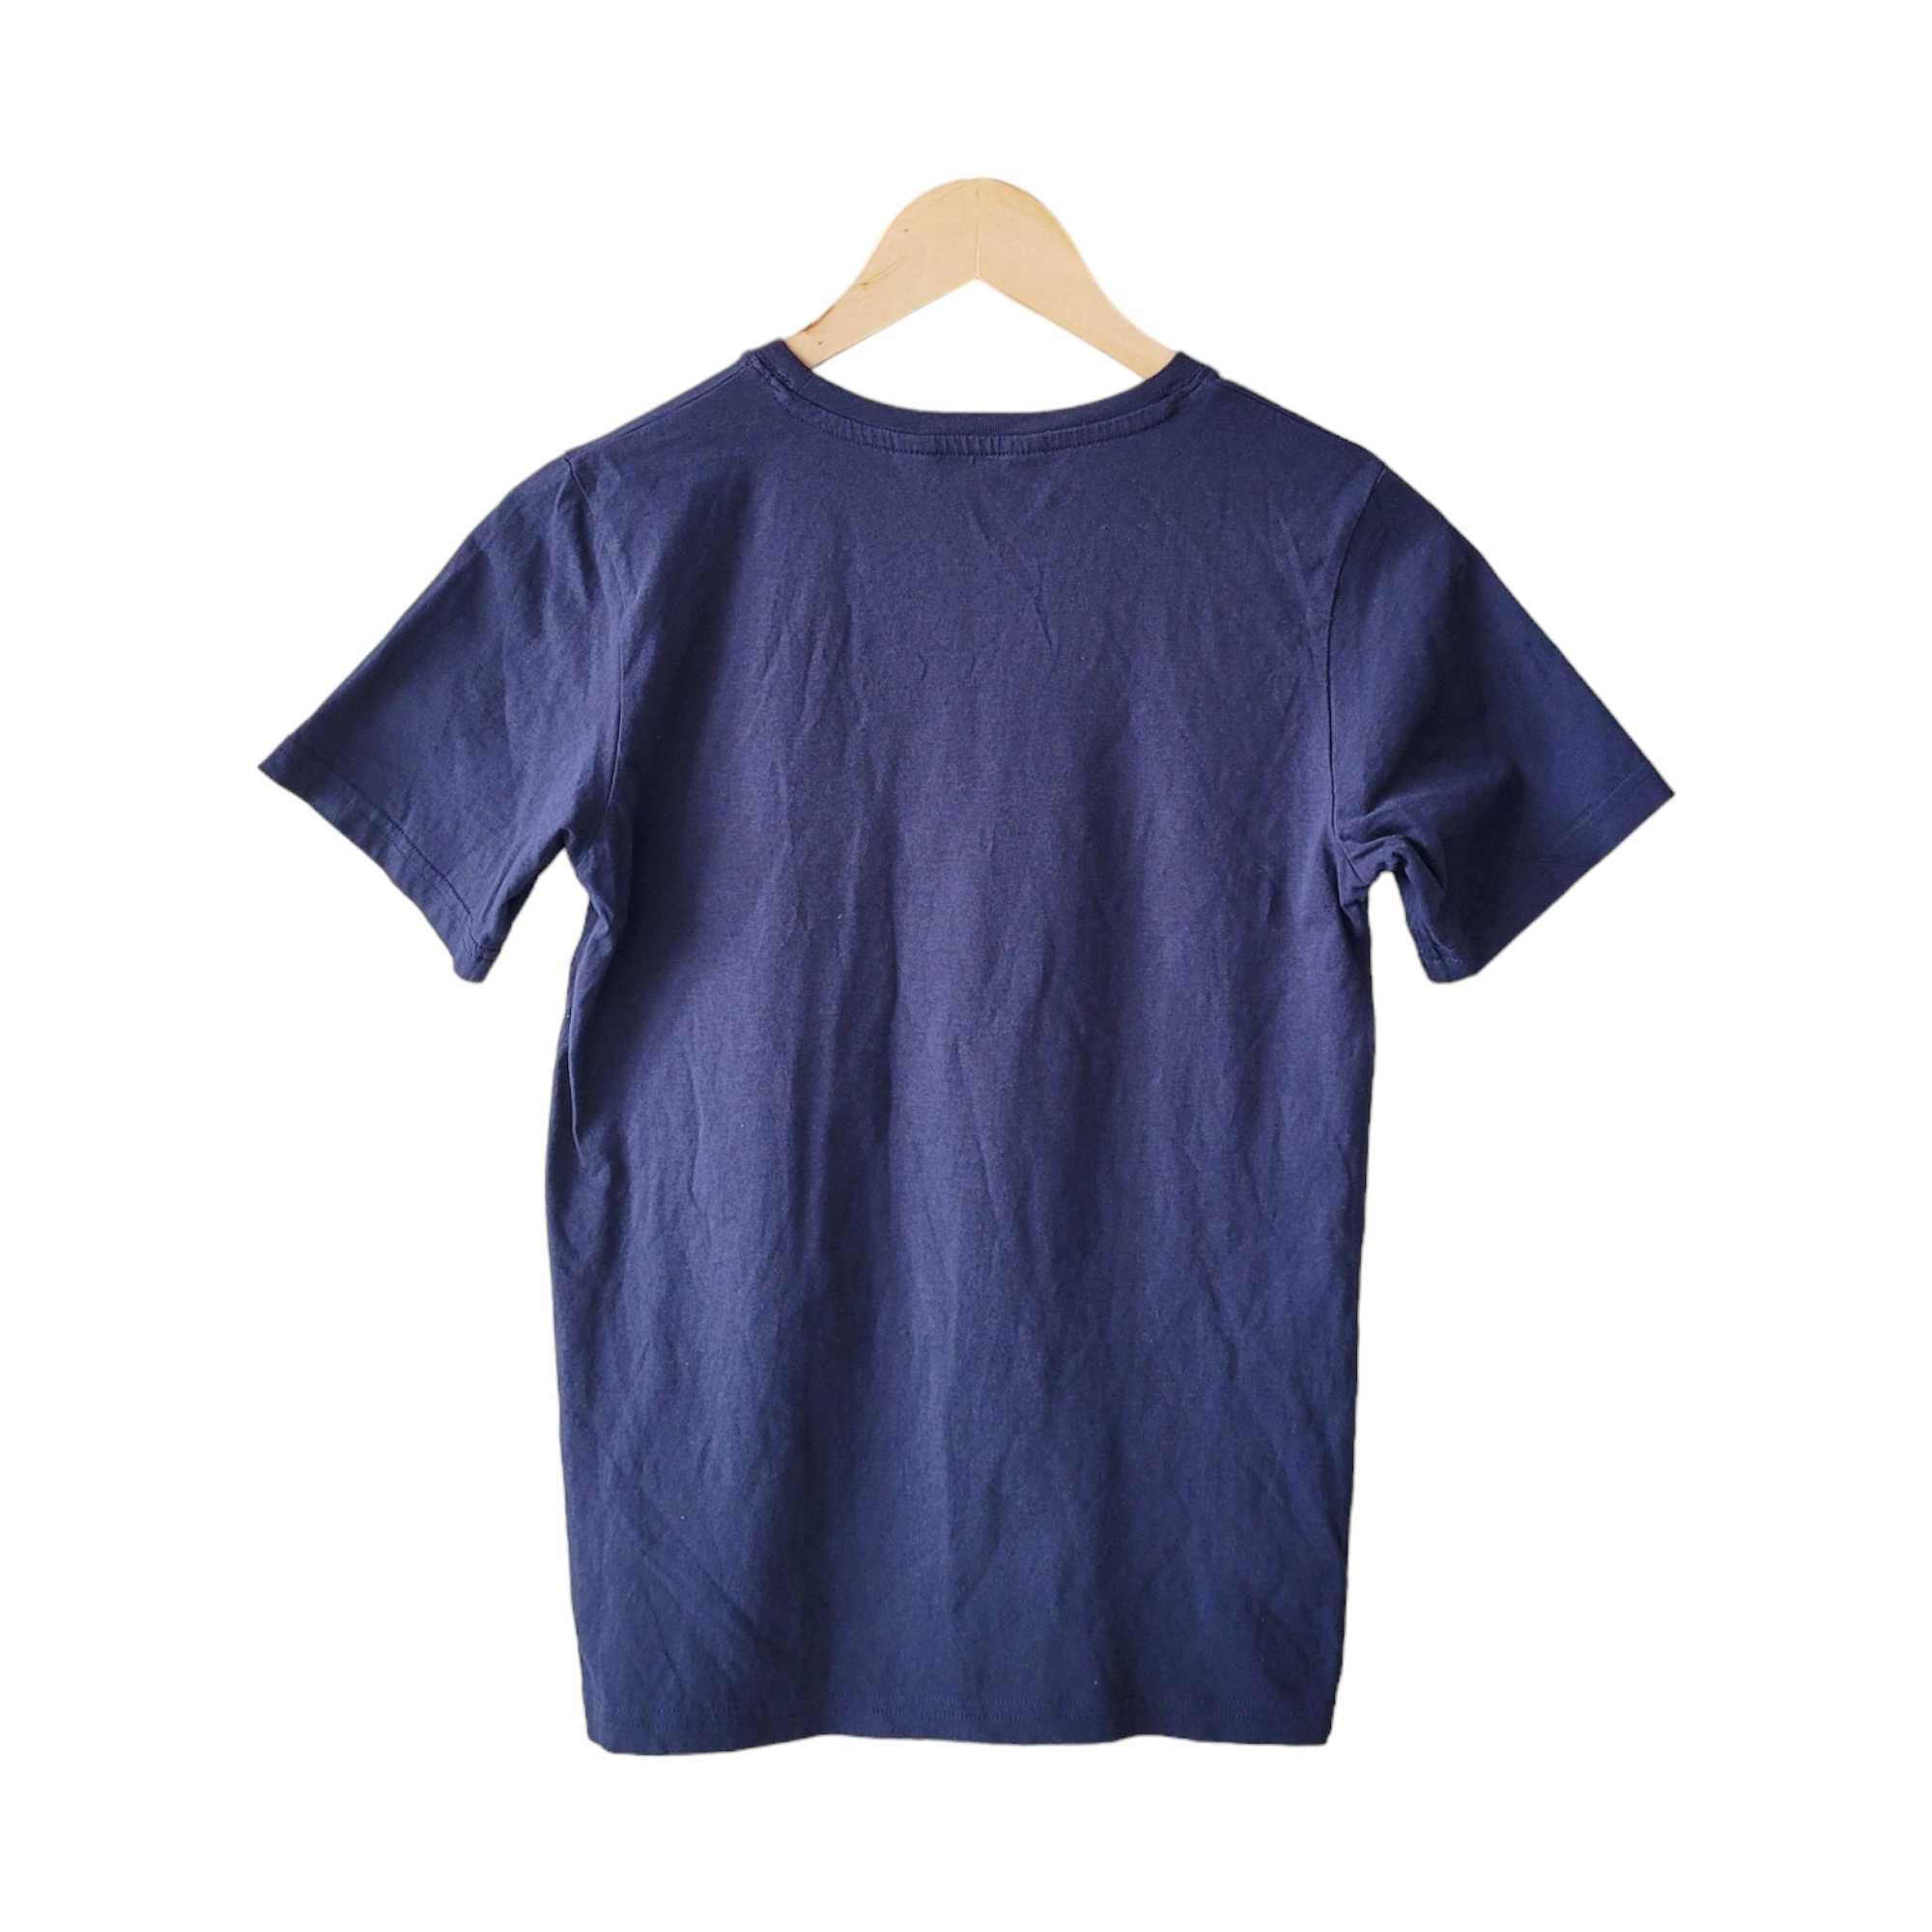 Granatowy t-shirt 146 152 H&M buldożek pies bawełna koszulka 10 12 lat